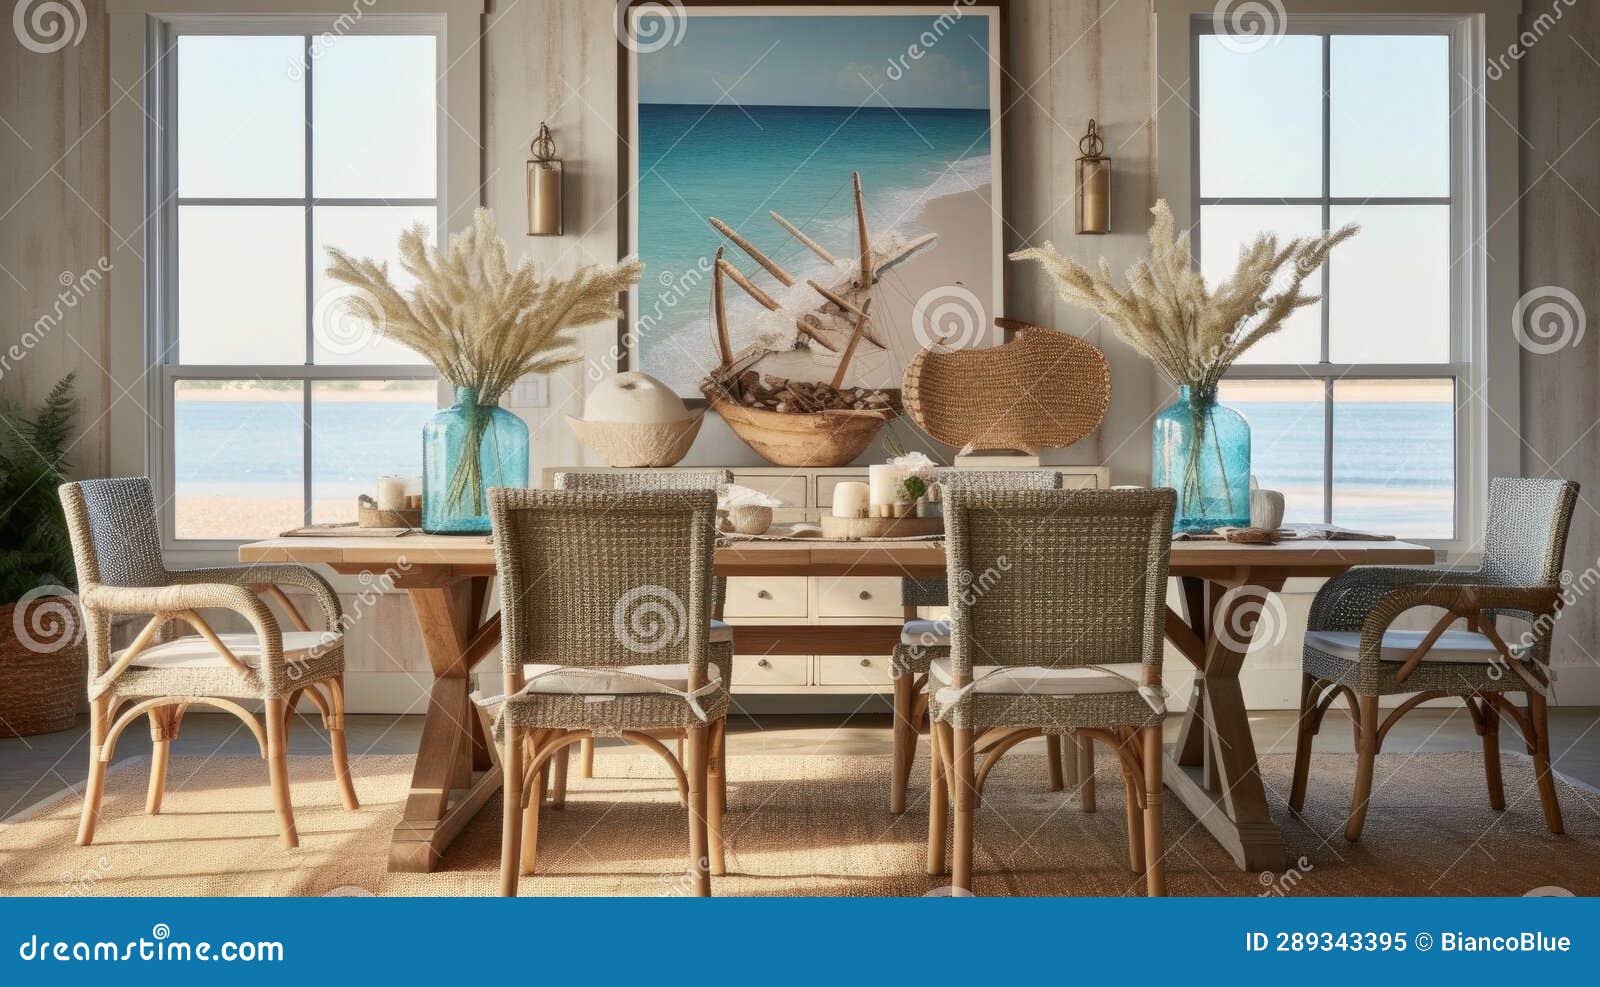 https://thumbs.dreamstime.com/z/interior-design-inspiration-coastal-nautical-style-dining-room-loveliness-interior-design-inspiration-coastal-nautical-style-289343395.jpg